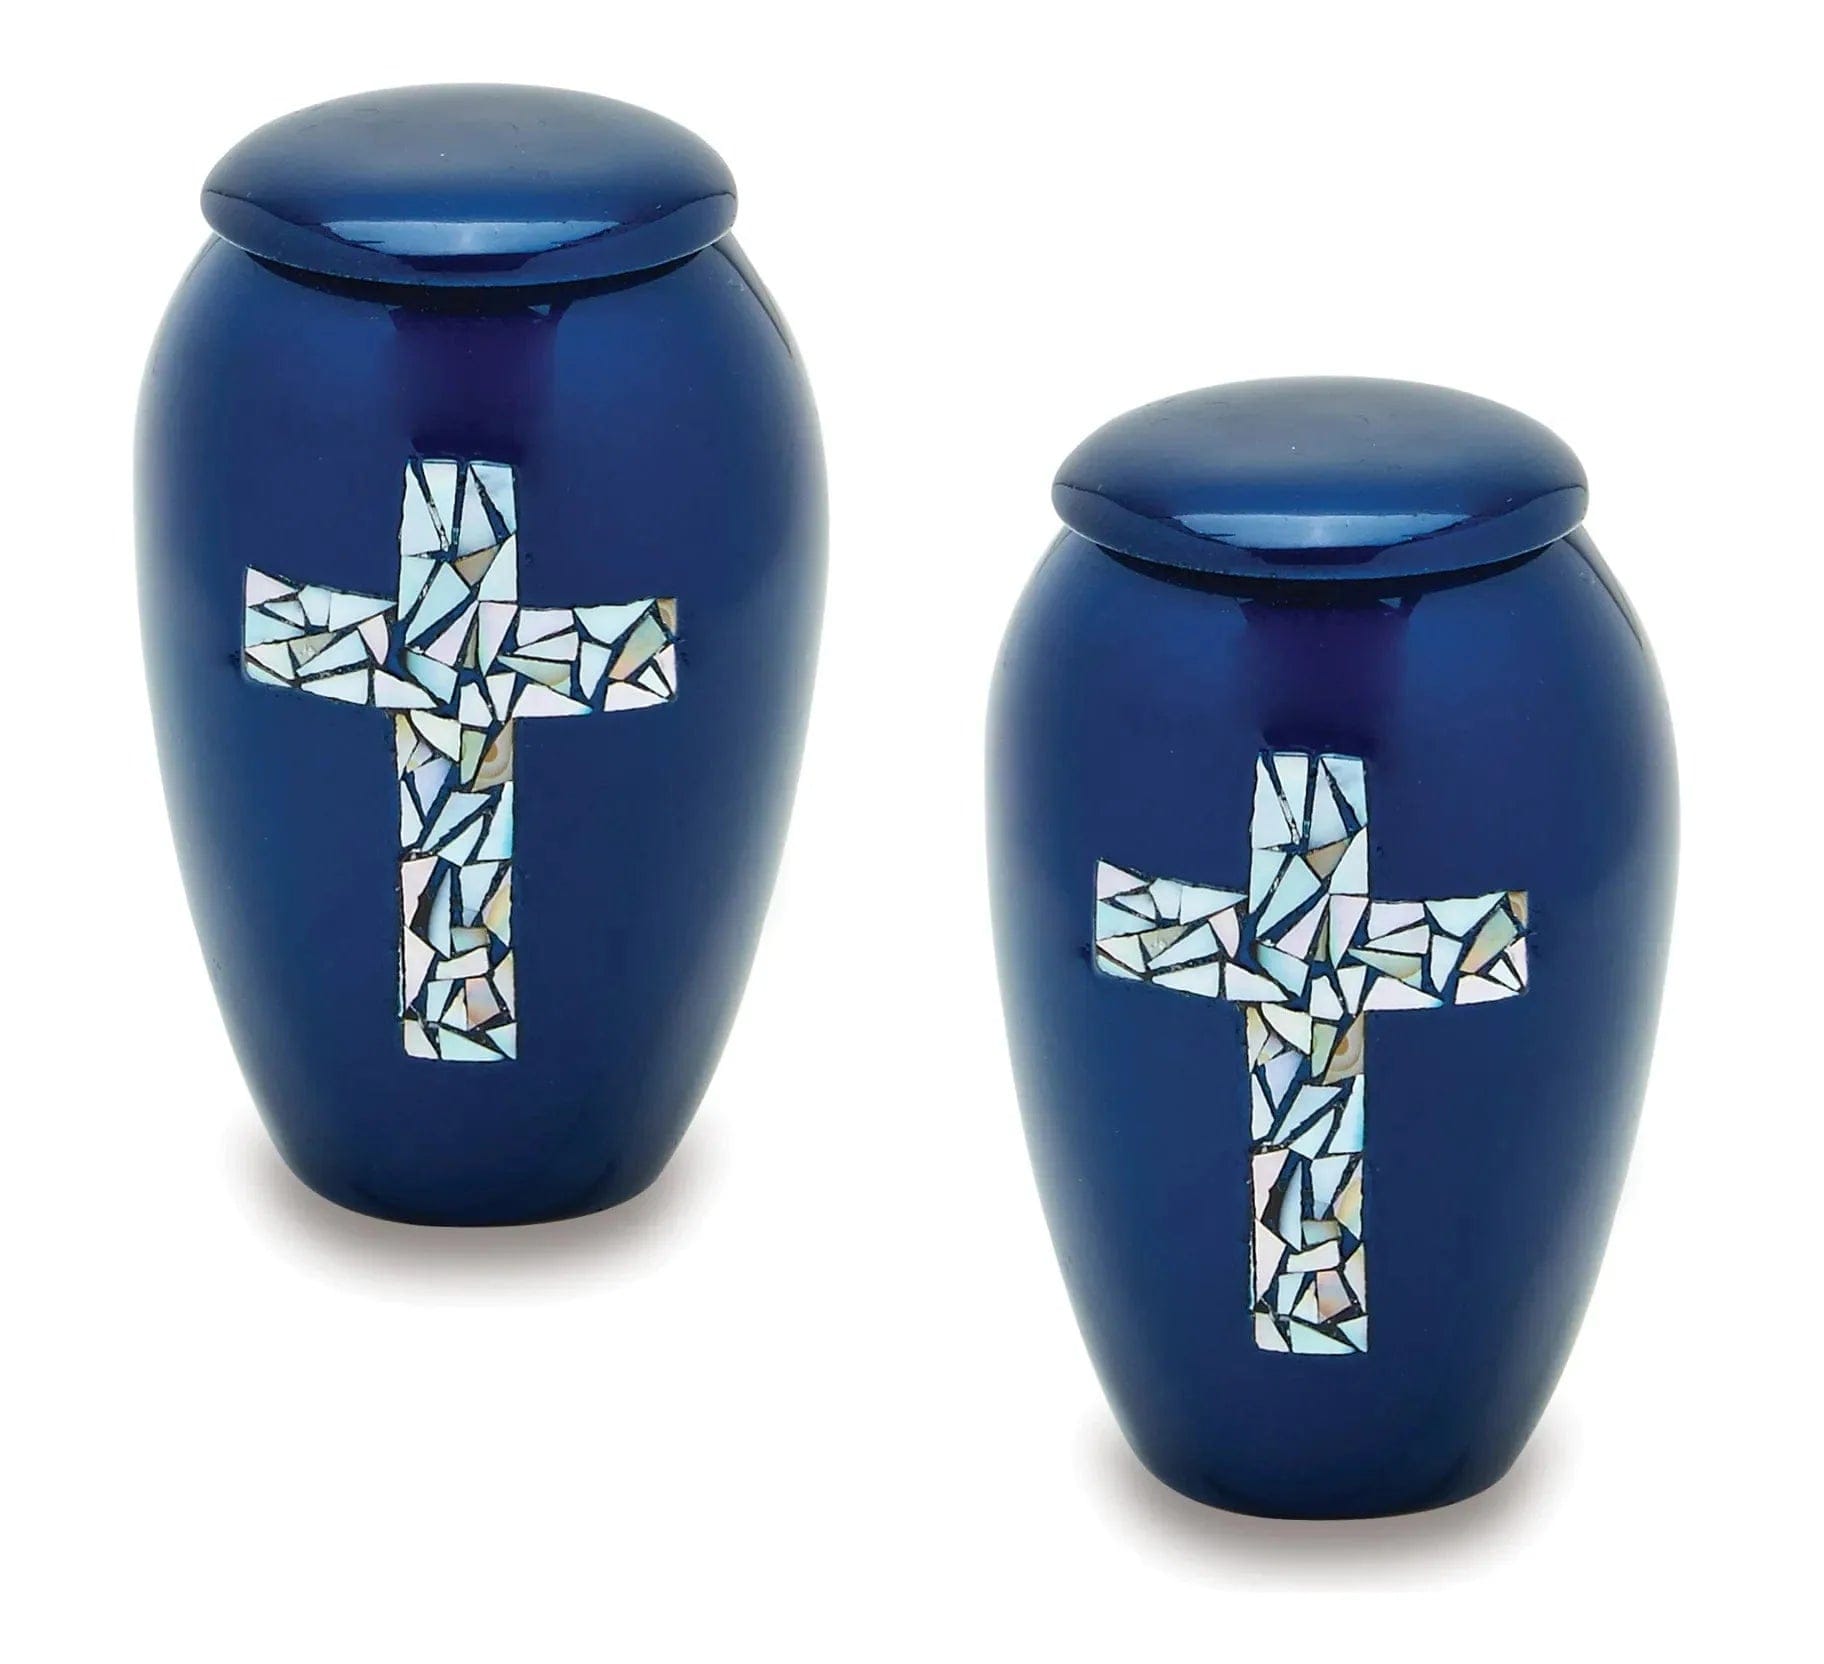 Pair of Pet Keepsake Urns - Blue Cross | Designer Keepsake Urns